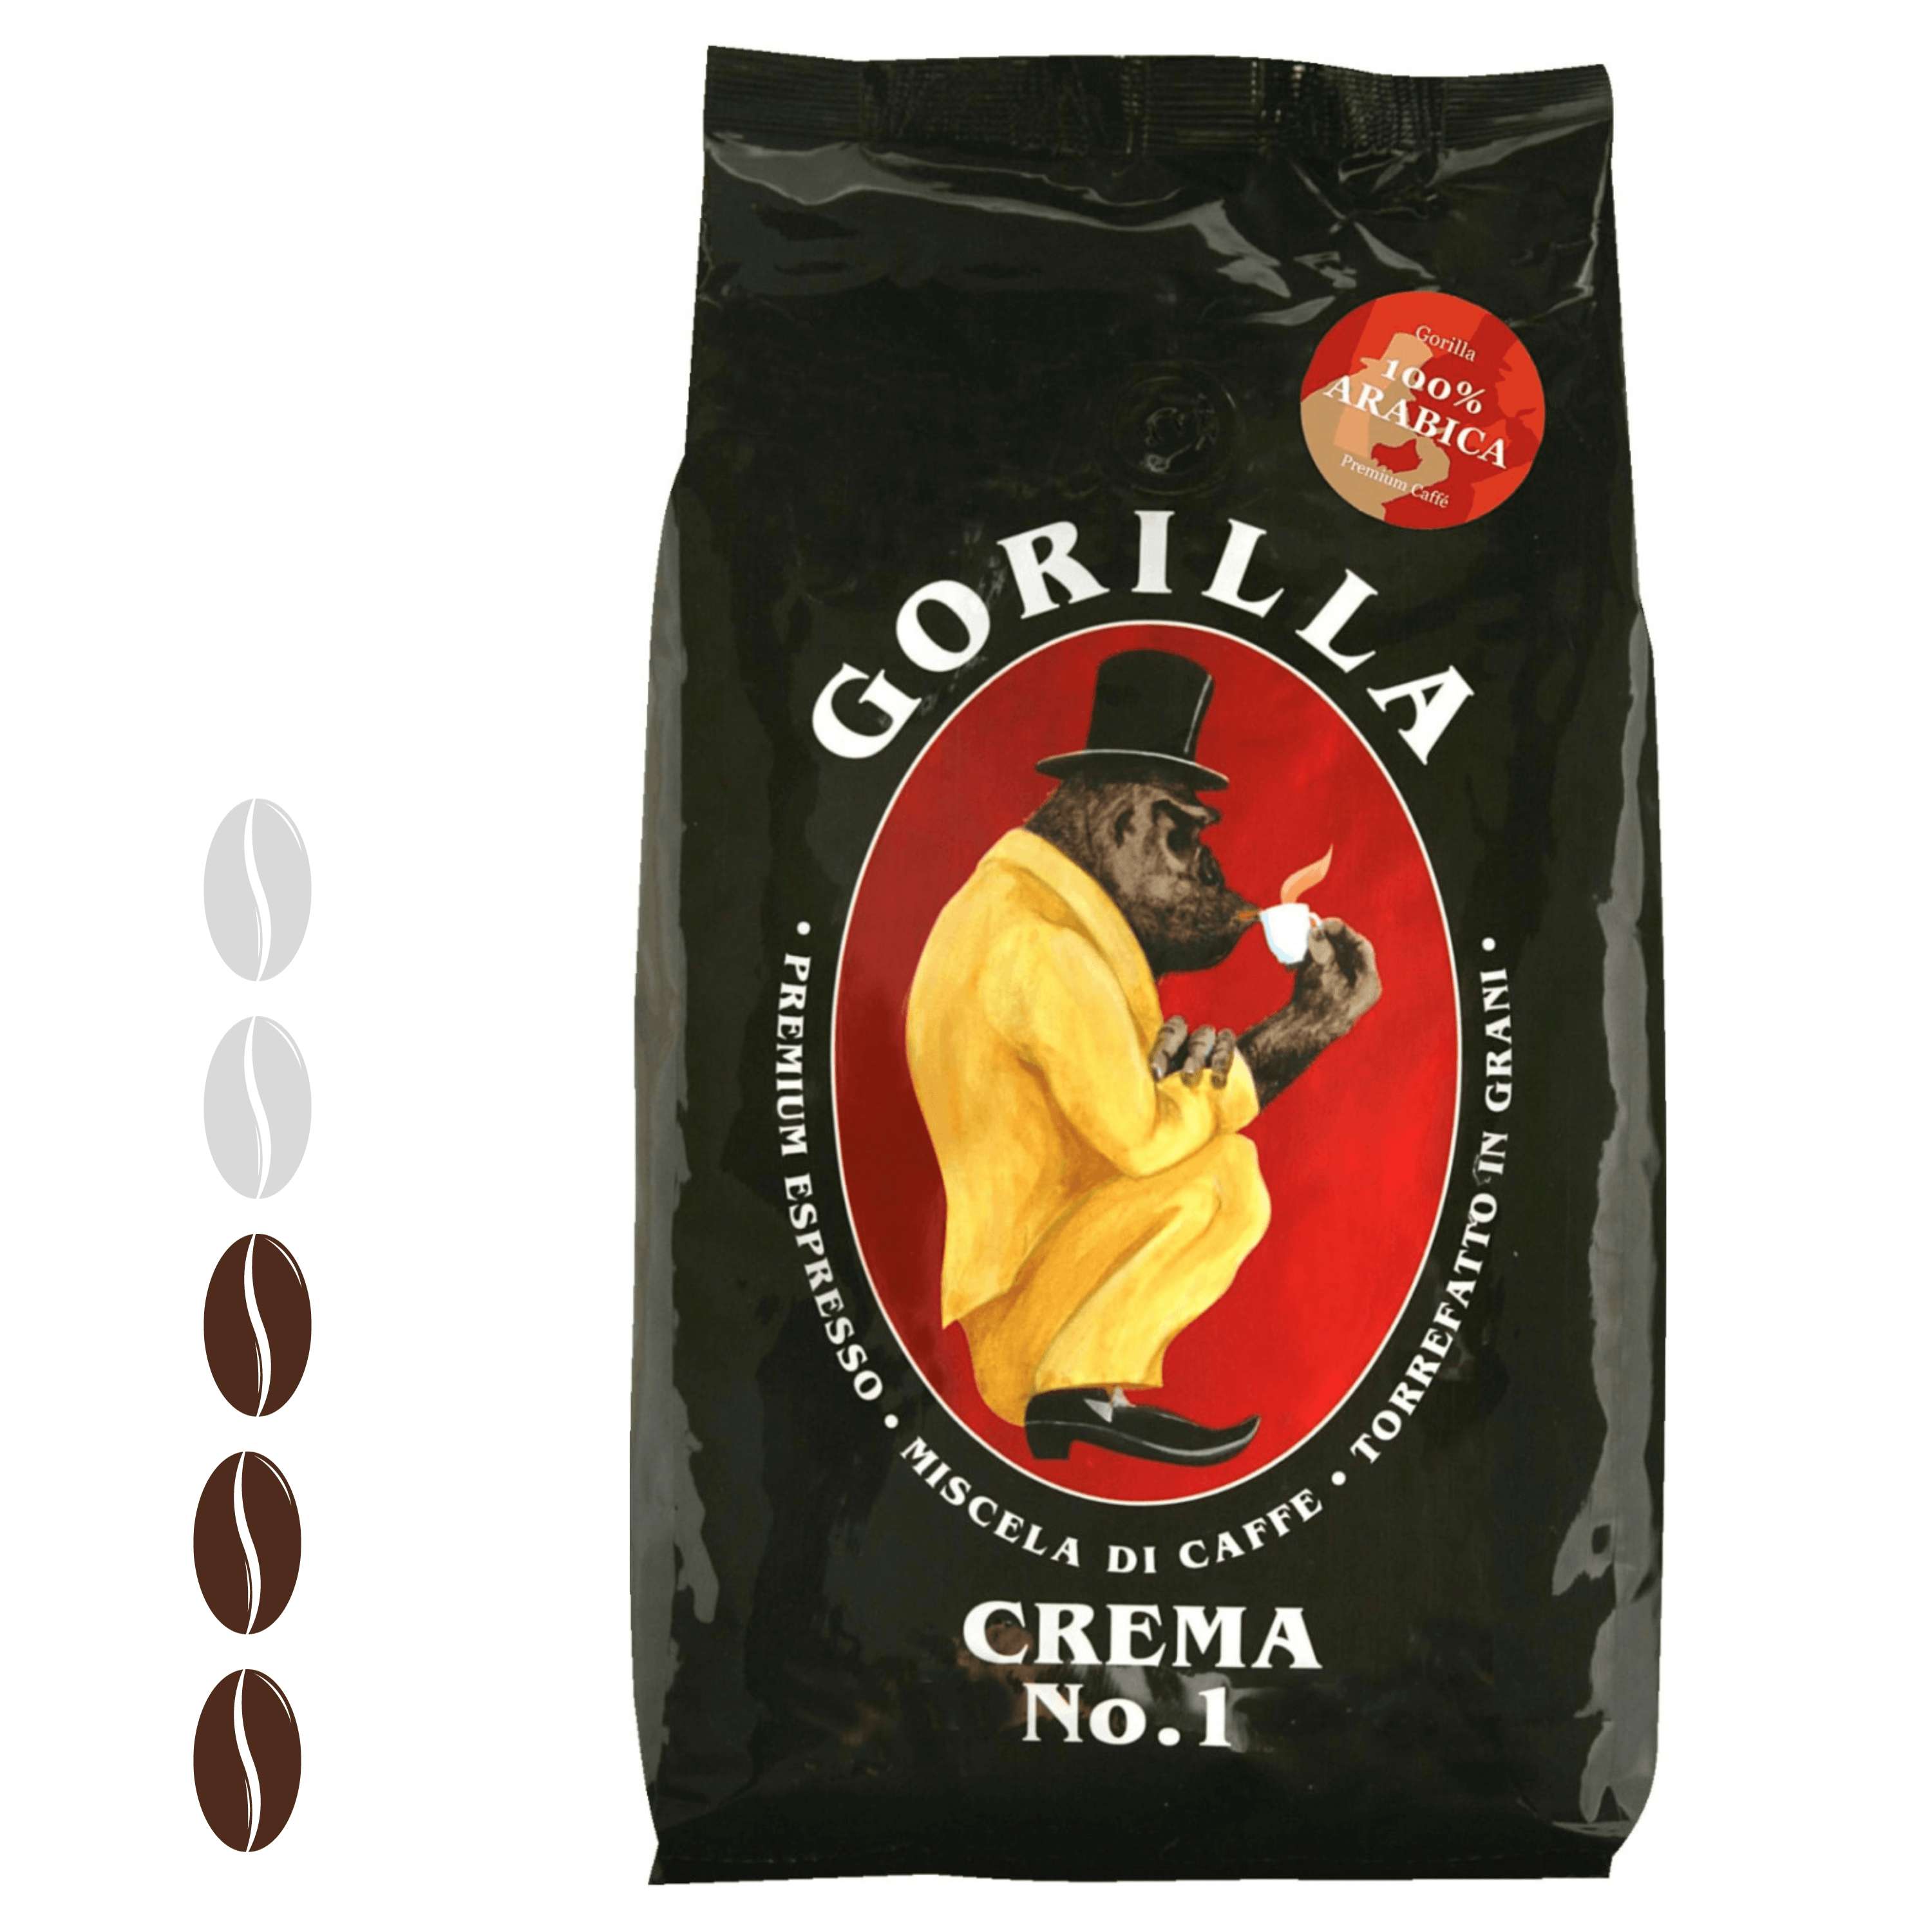 Gorilla Espresso Crema No.1  geringer Koffeingehalt